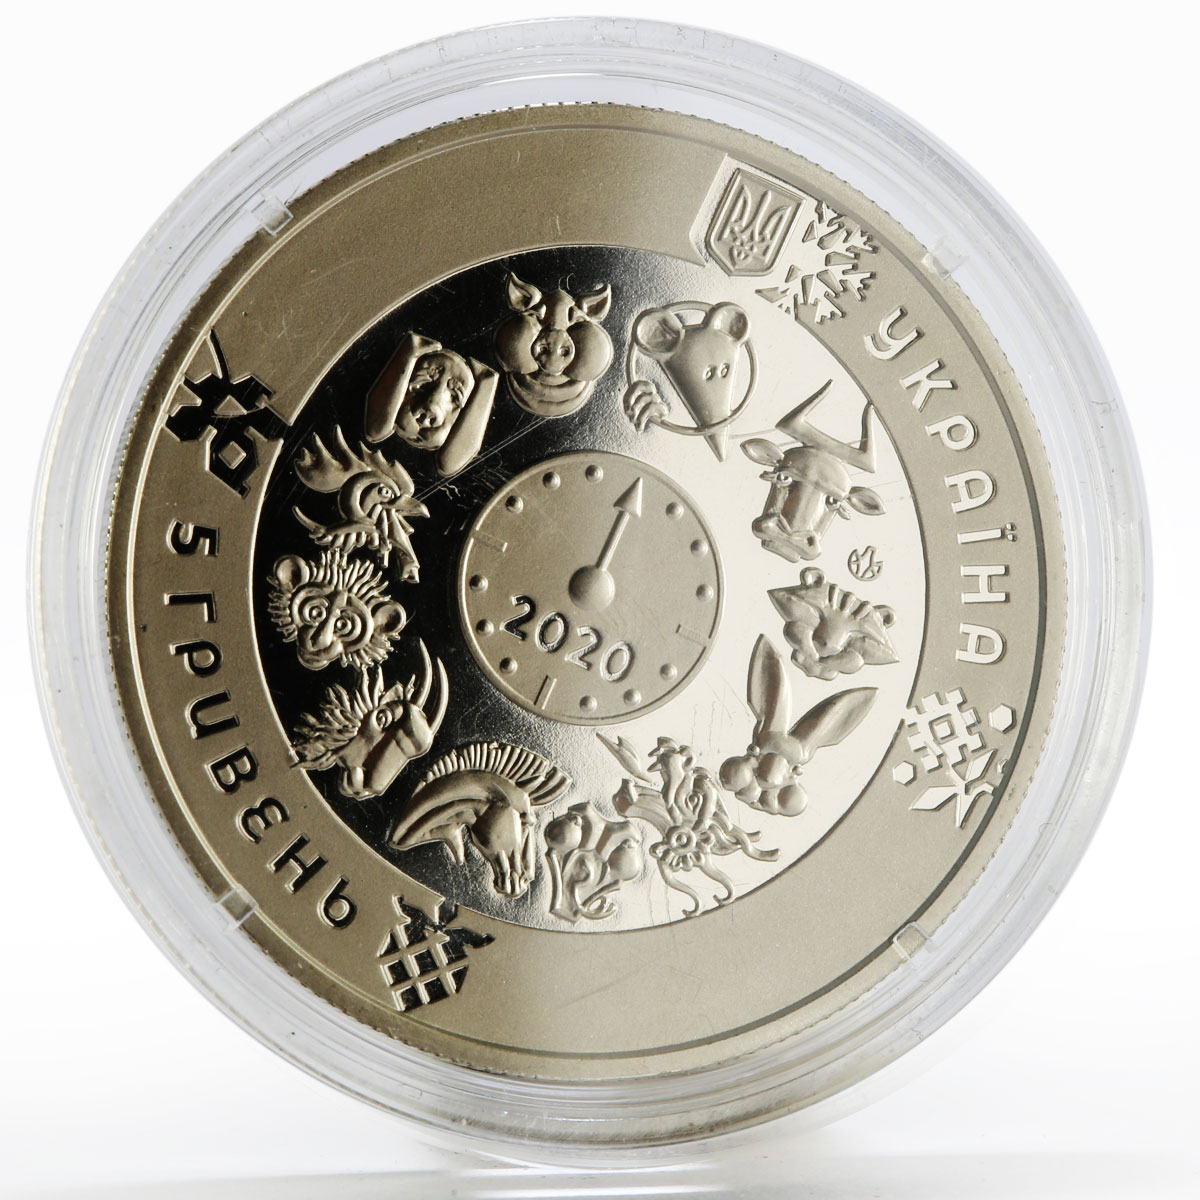 Ukraine 5 hryvnias Lunar Calendar series Year of the Rat nickel coin 2020